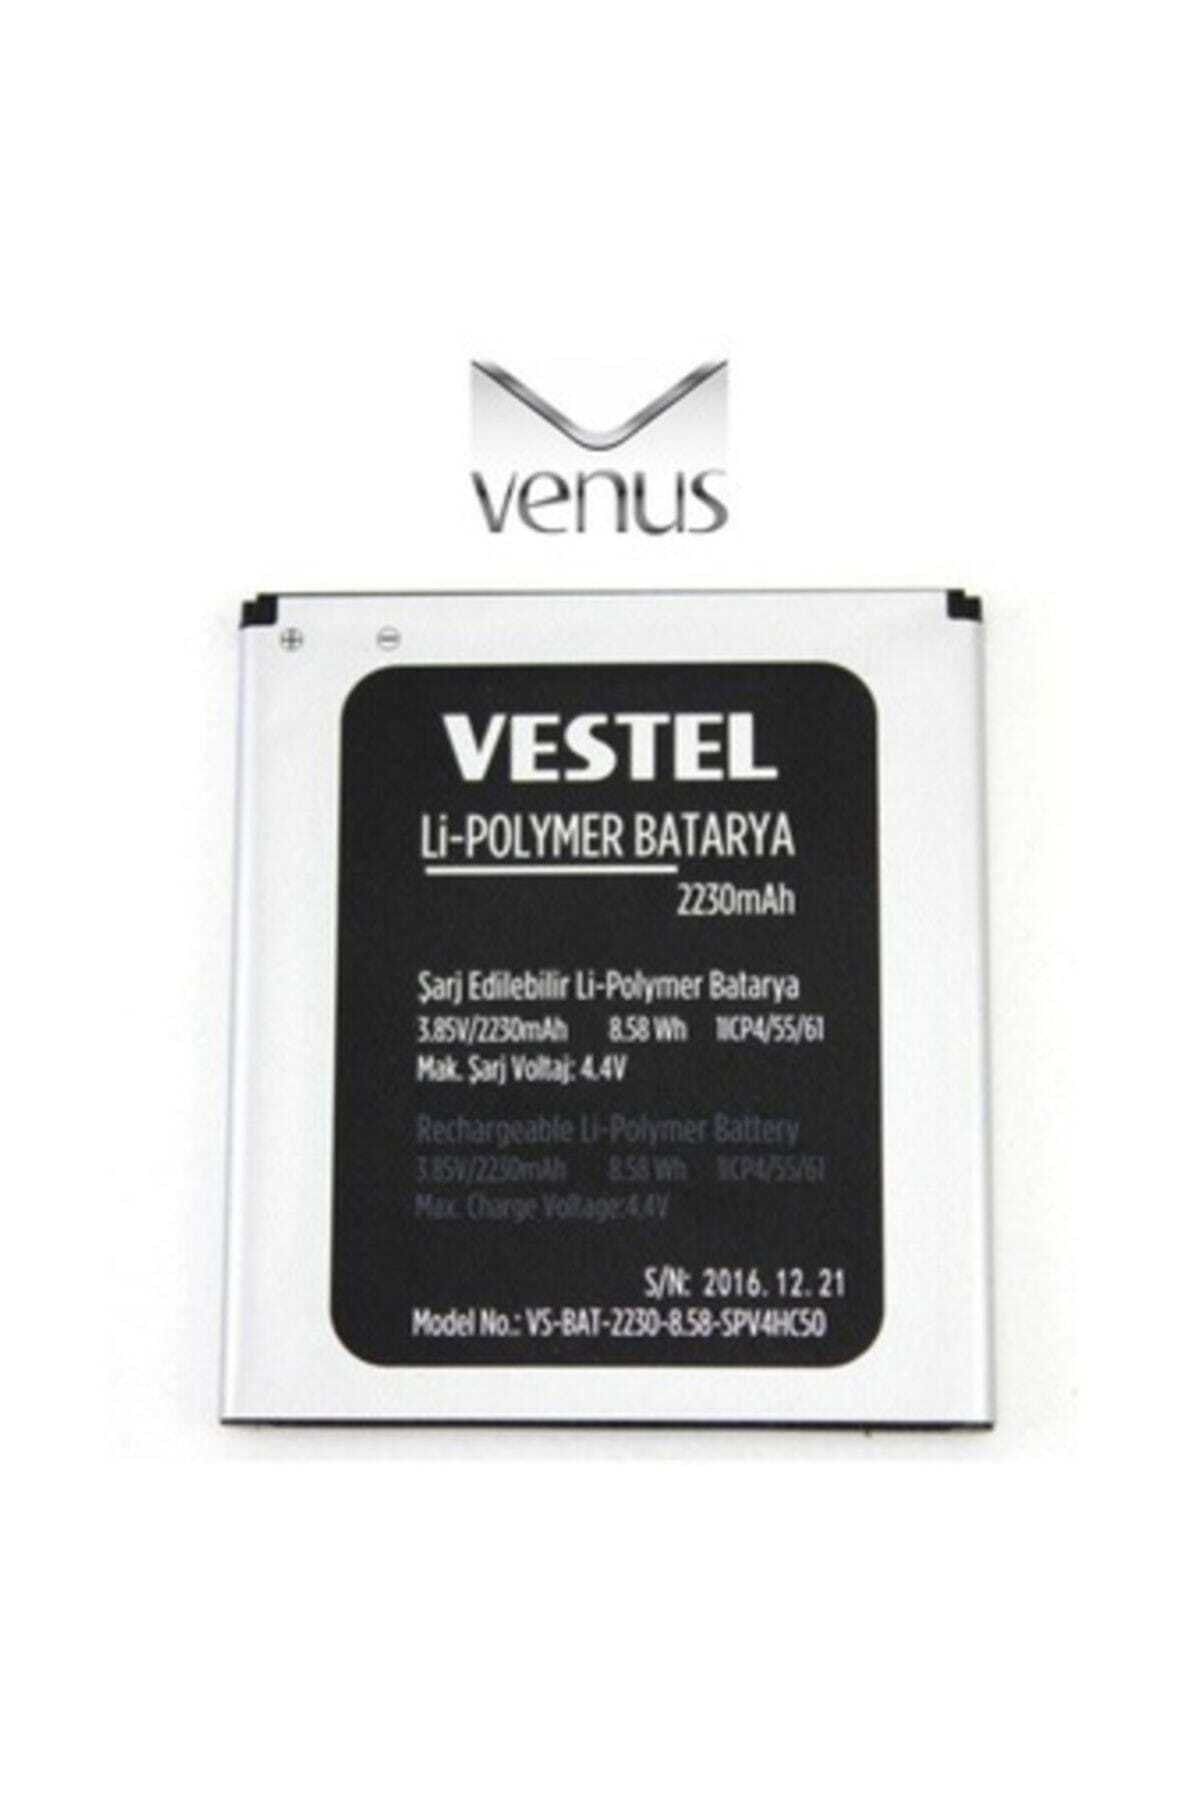 VESTEL Venüs E3 Vs-bat-2230-8.58 Batarya Pil